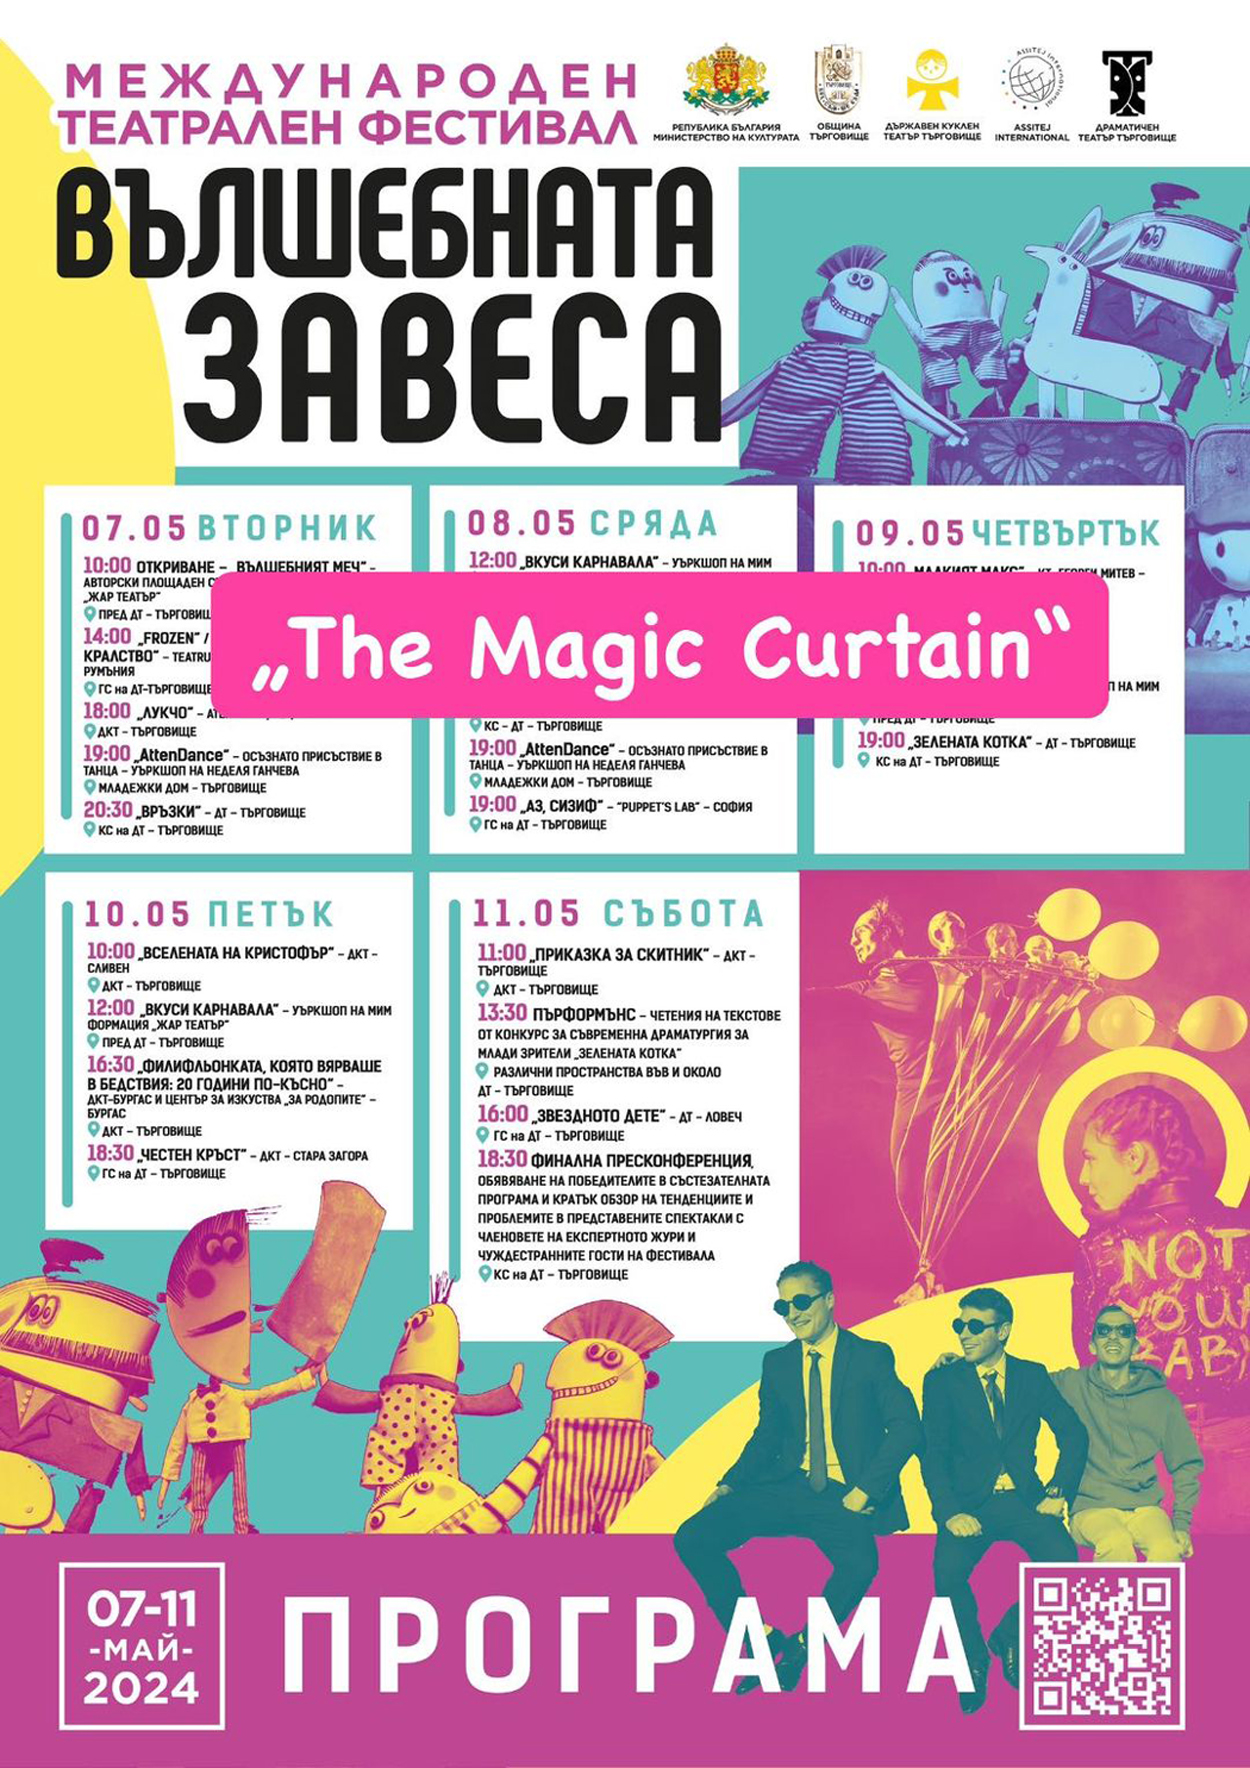 Der 23. Magische Vorhang im bulgarischen Targowischte